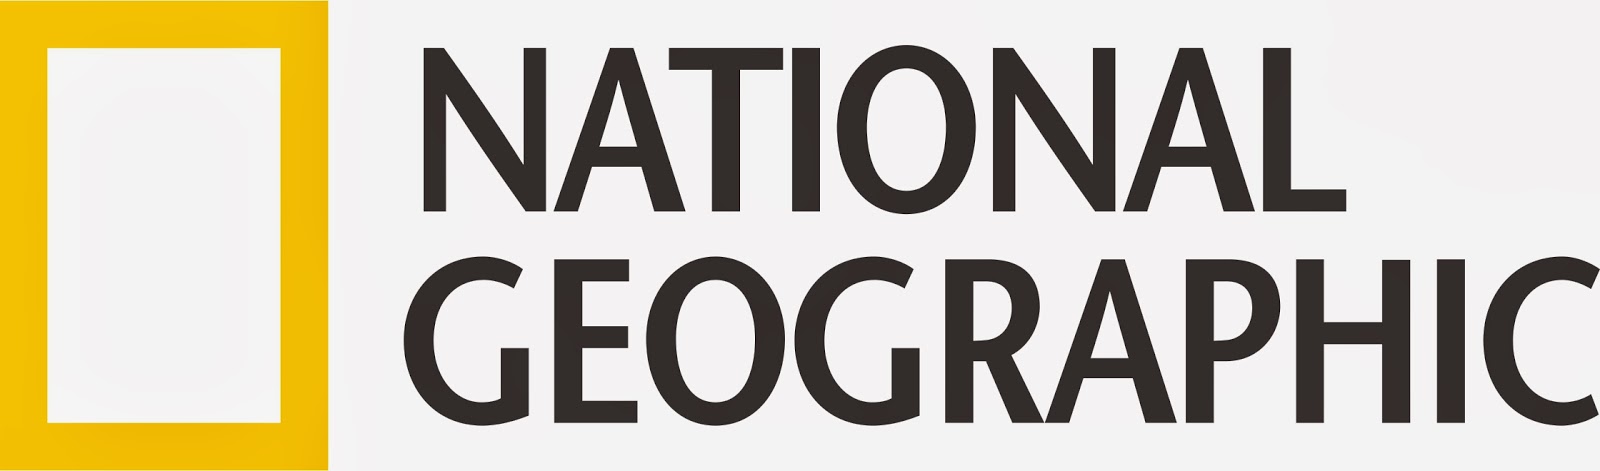 File:NatGeo People logo.png -